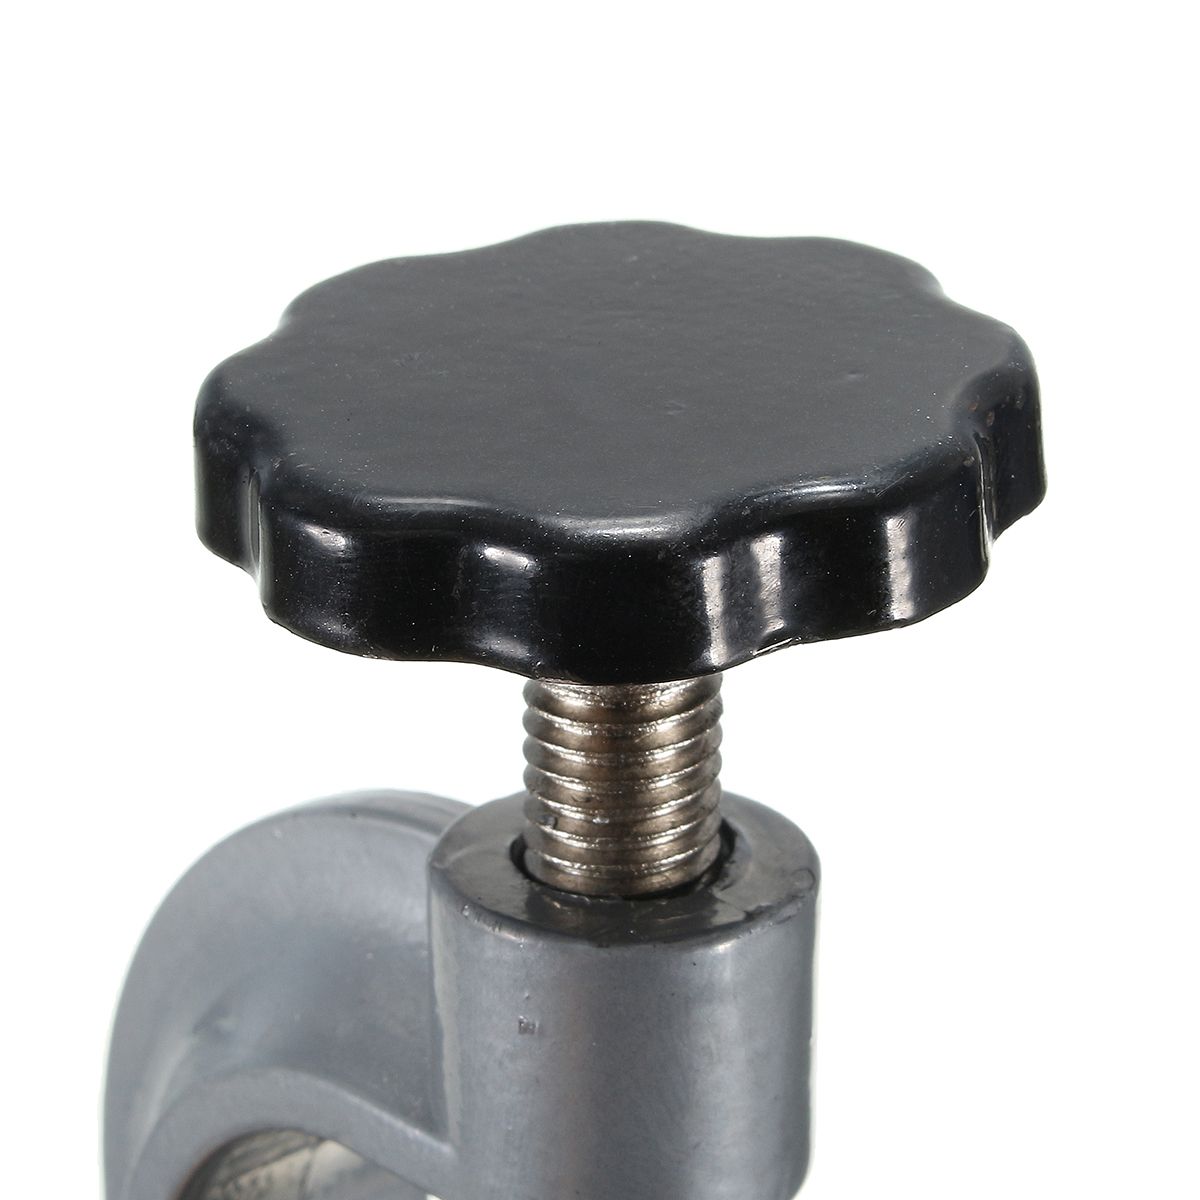 Vise-Workbench-Swivel-360deg-Rotating-Clamp-Table-Top-Deluxe-Craft-Repair-DIY-Tool-1121862